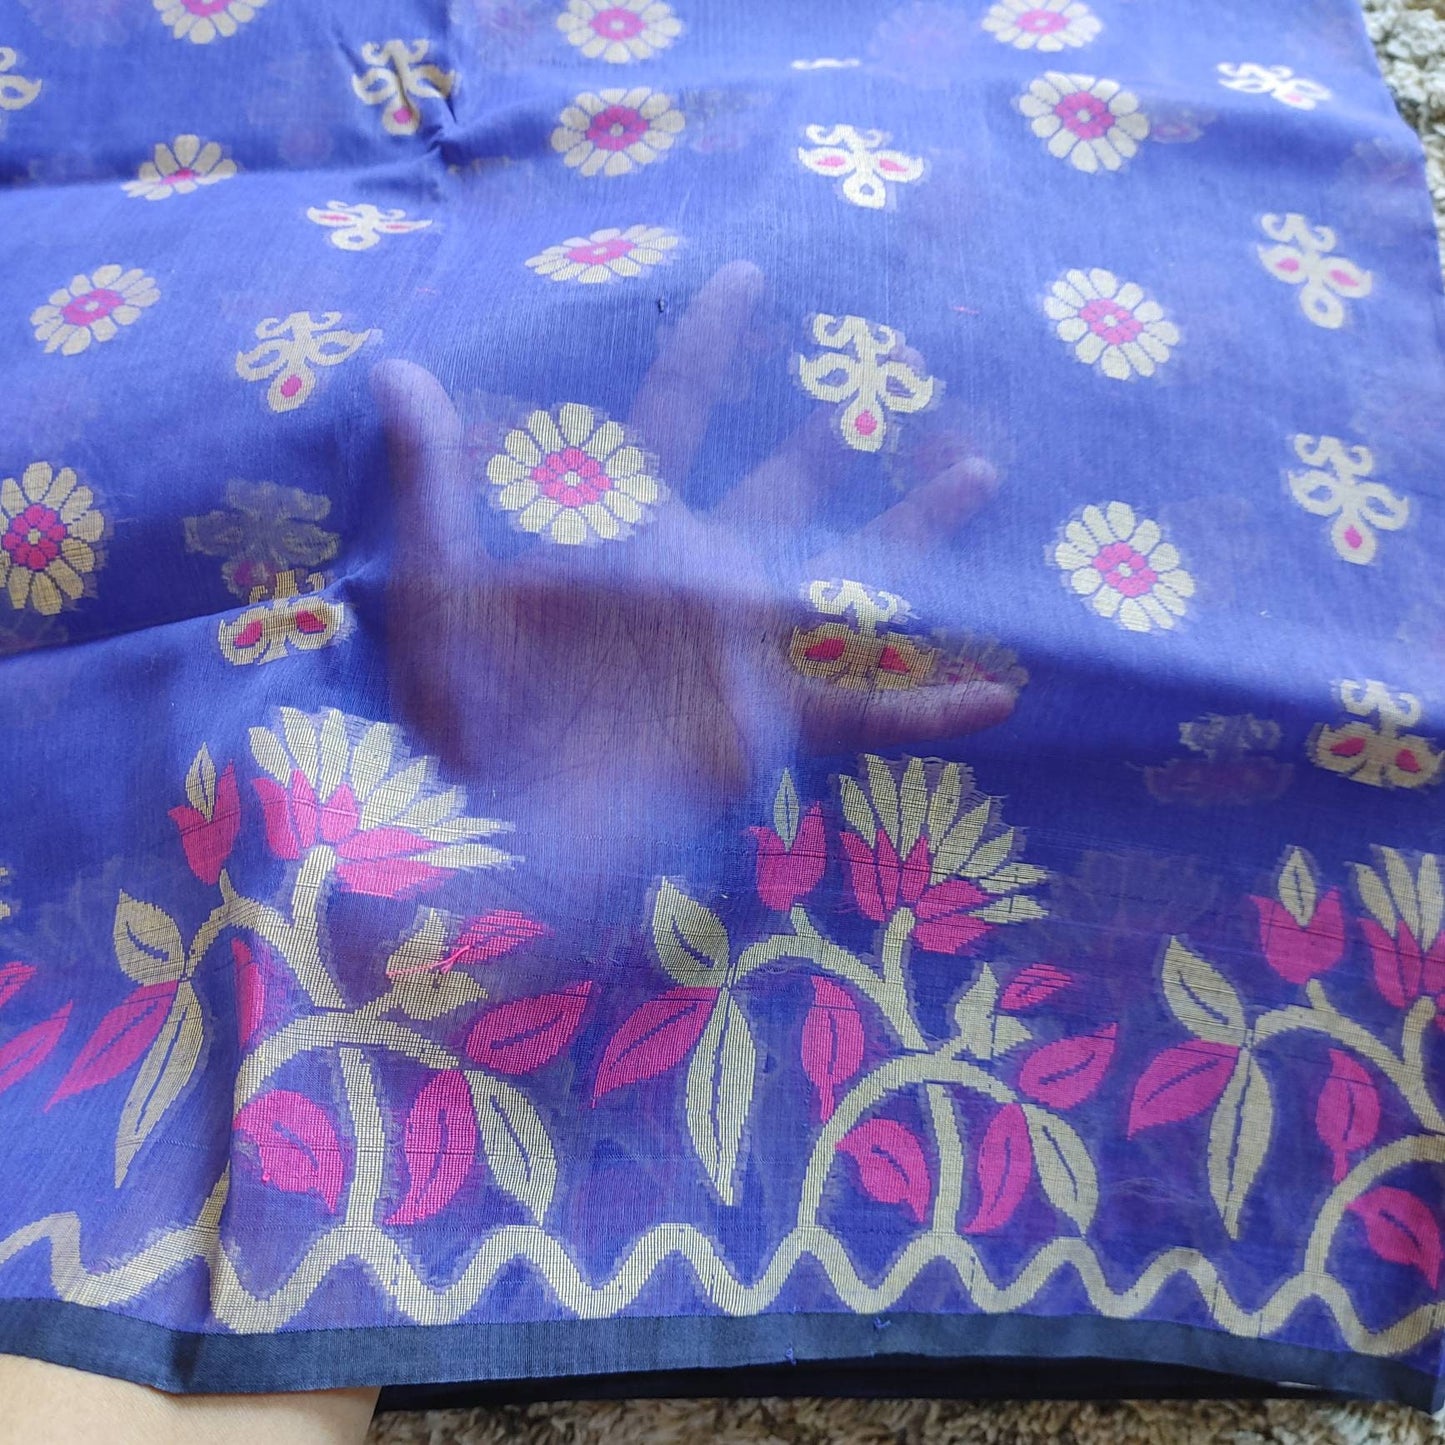 Tangail Muslin Silk-Cotton Jamdani Saree, Handloom, Beautiful Royal Blue with Majenta-Golden Thread Work, Elegant,Classy Party Ware